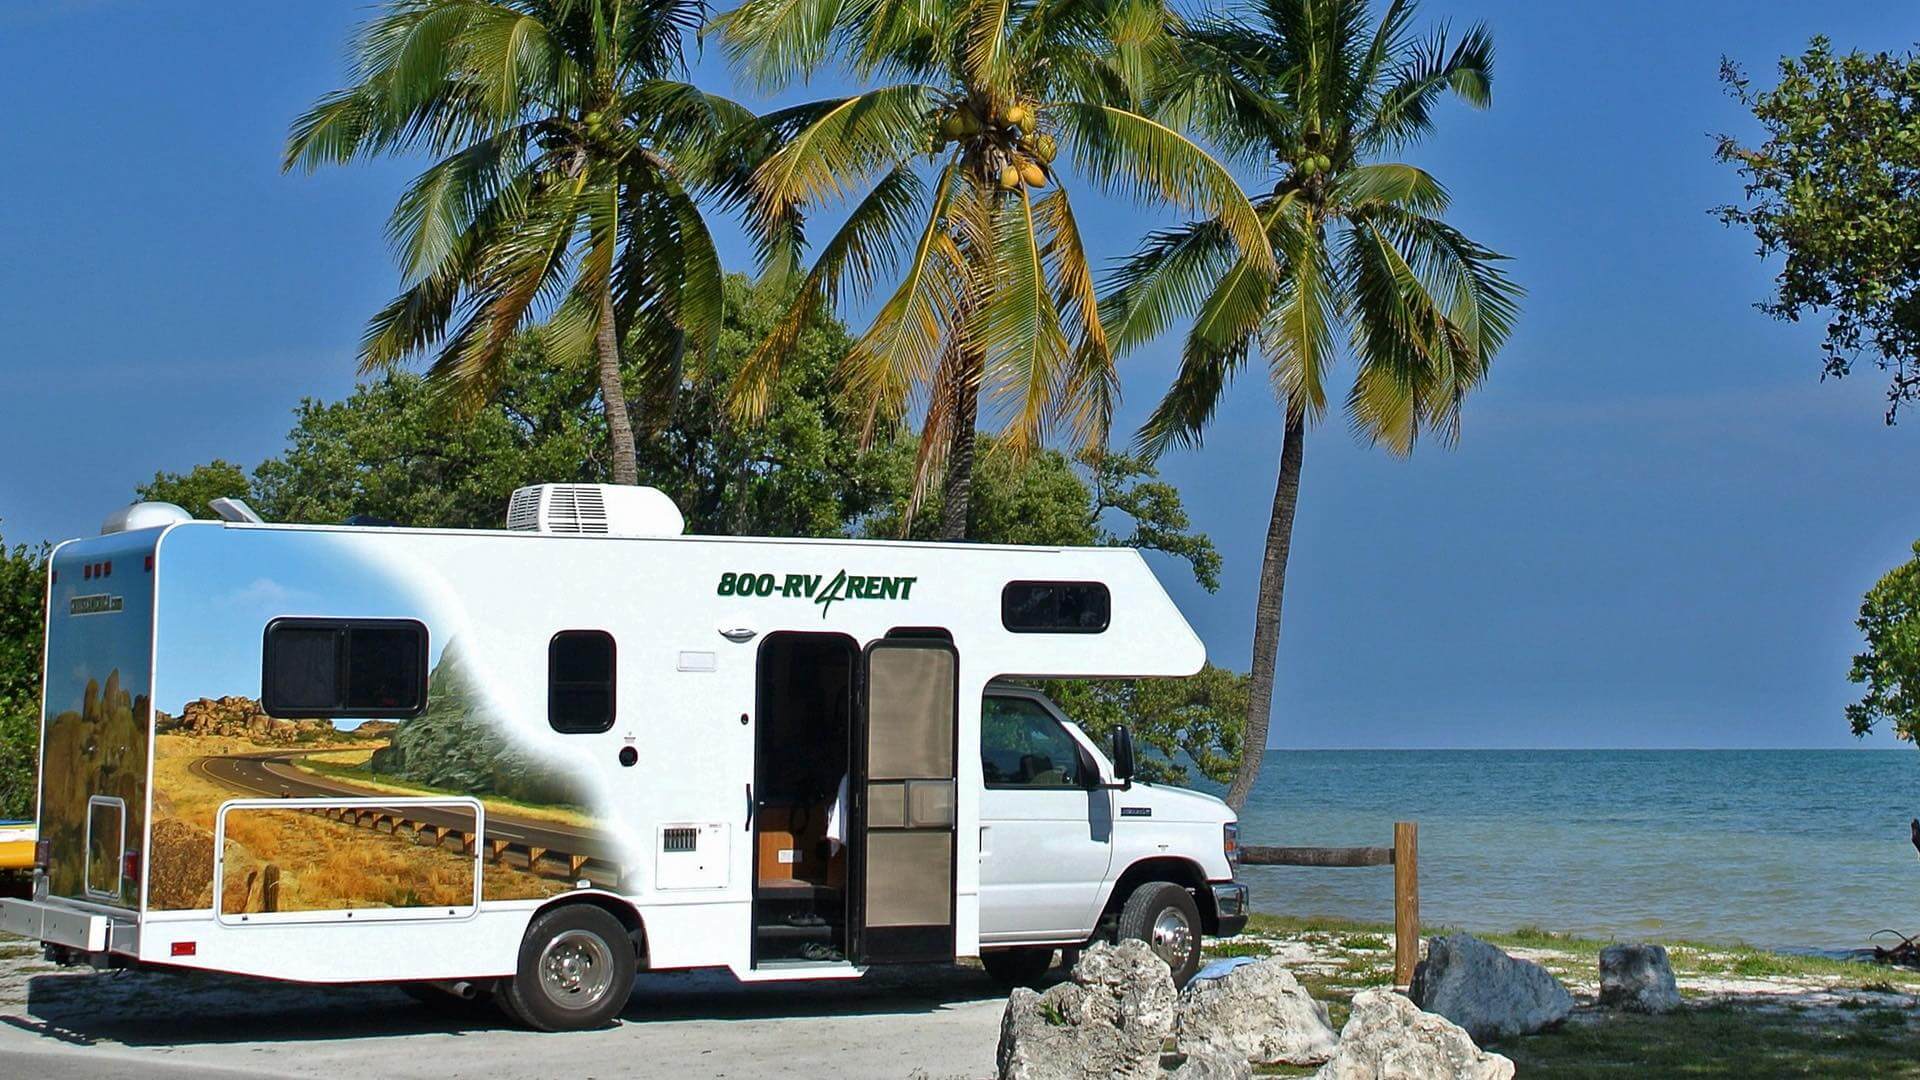 Wohnmobil am Strand in Florida